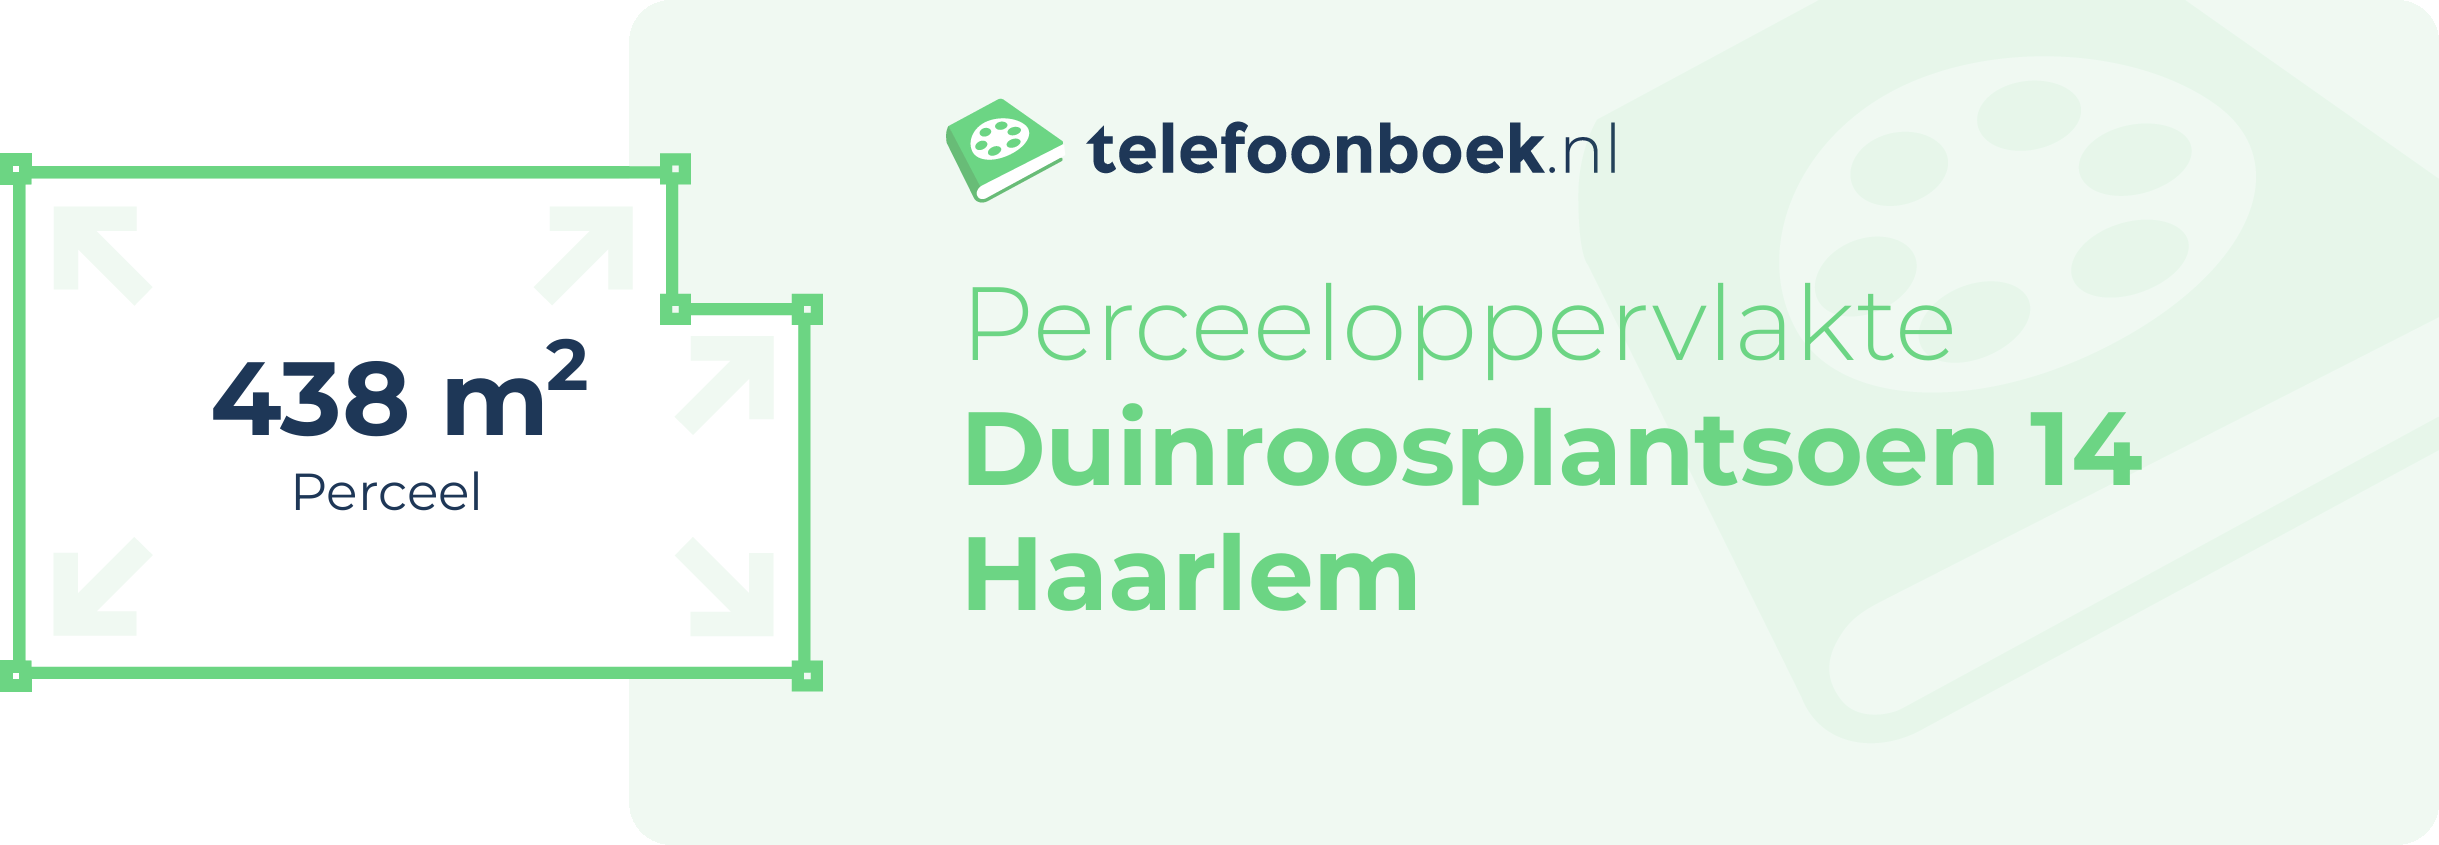 Perceeloppervlakte Duinroosplantsoen 14 Haarlem